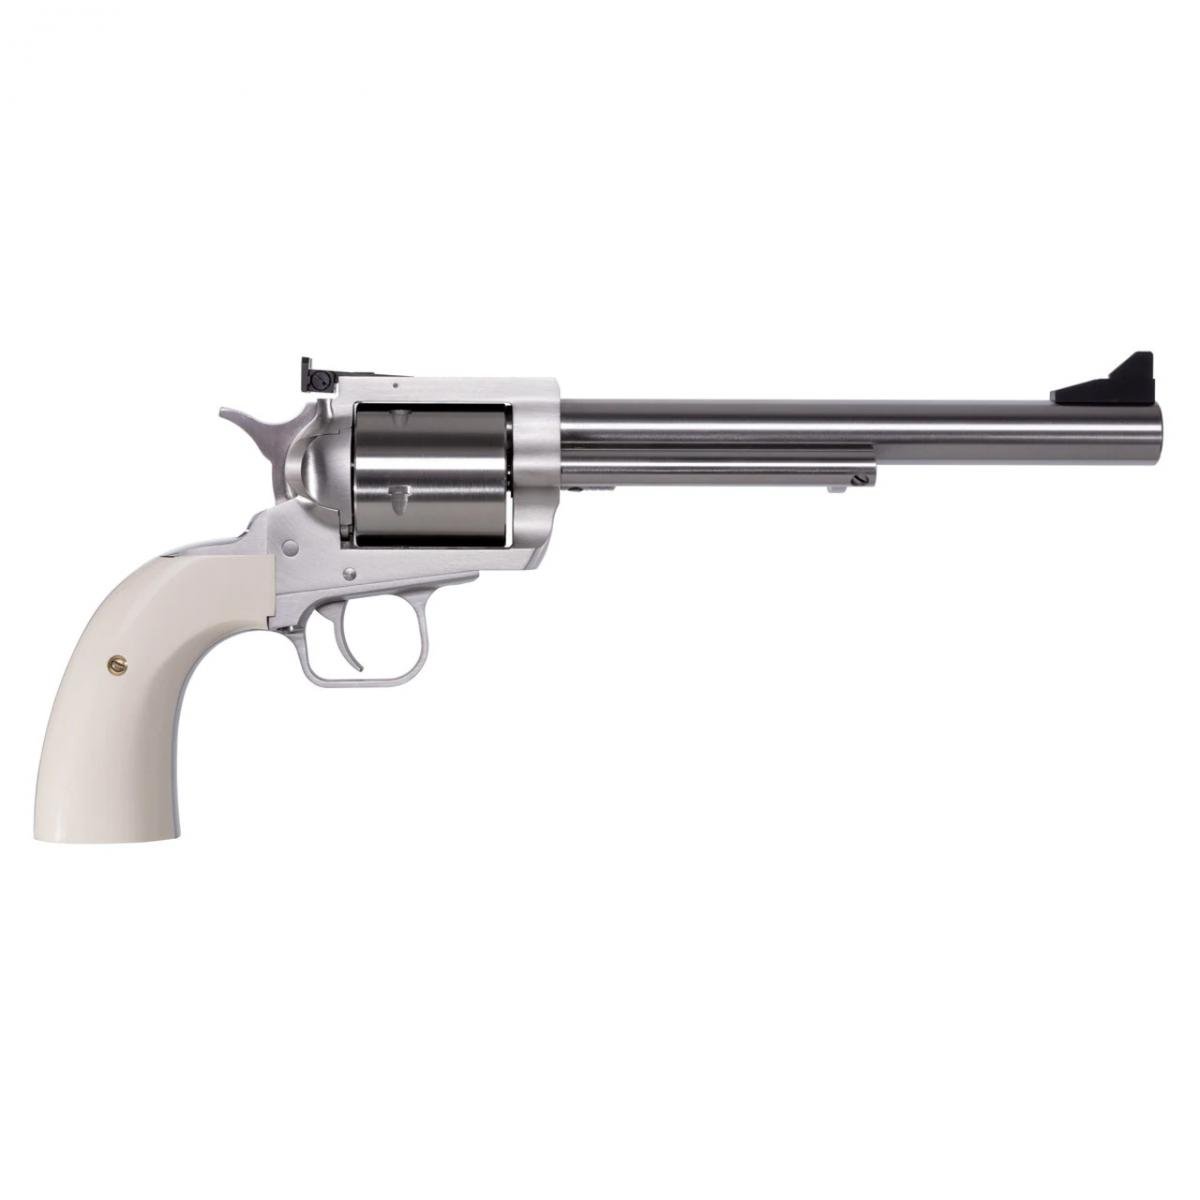 Magnum Research Bfr Revolver 475 Linebaugh 480 Ruger Bfr480 4757b Gun Deals